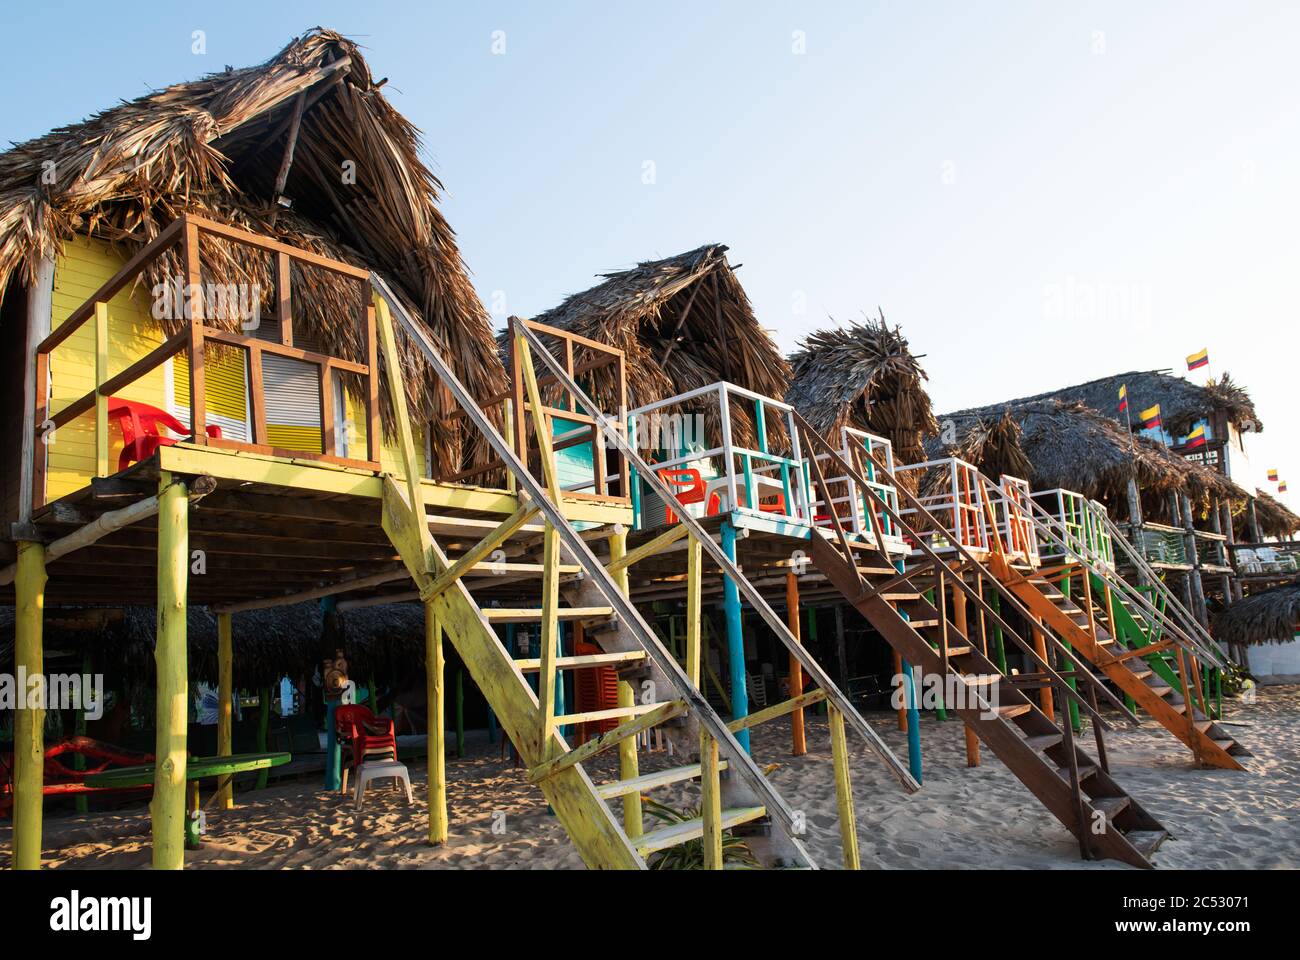 Small wooden bungalows along Playa Blanca beach, Cartagena, Colombia Stock Photo